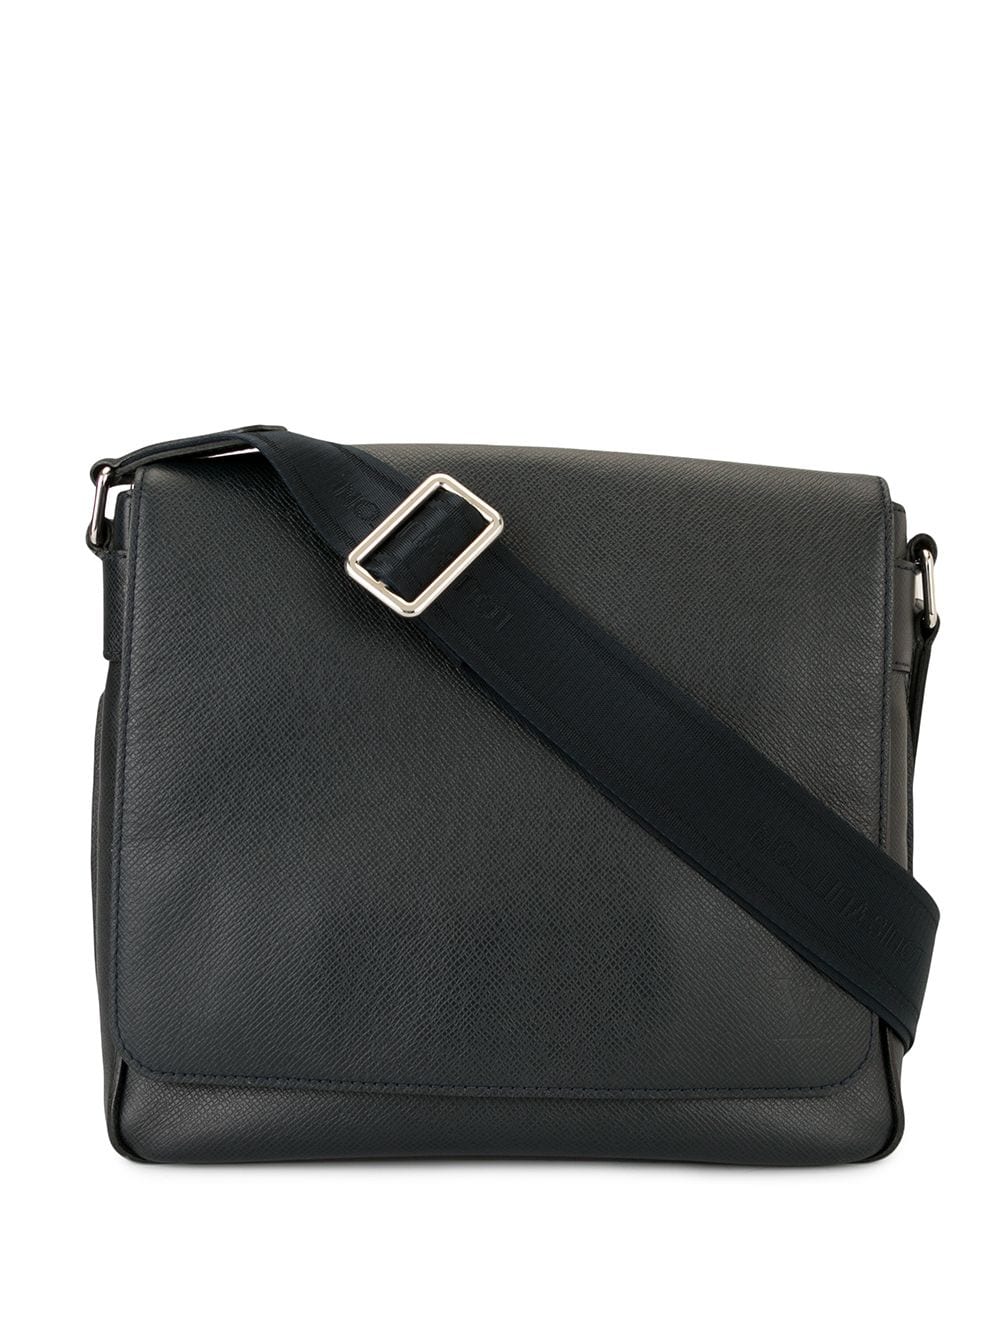 Pre-Owned Louis Vuitton Roman Pm Shoulder Bag In Navy | ModeSens